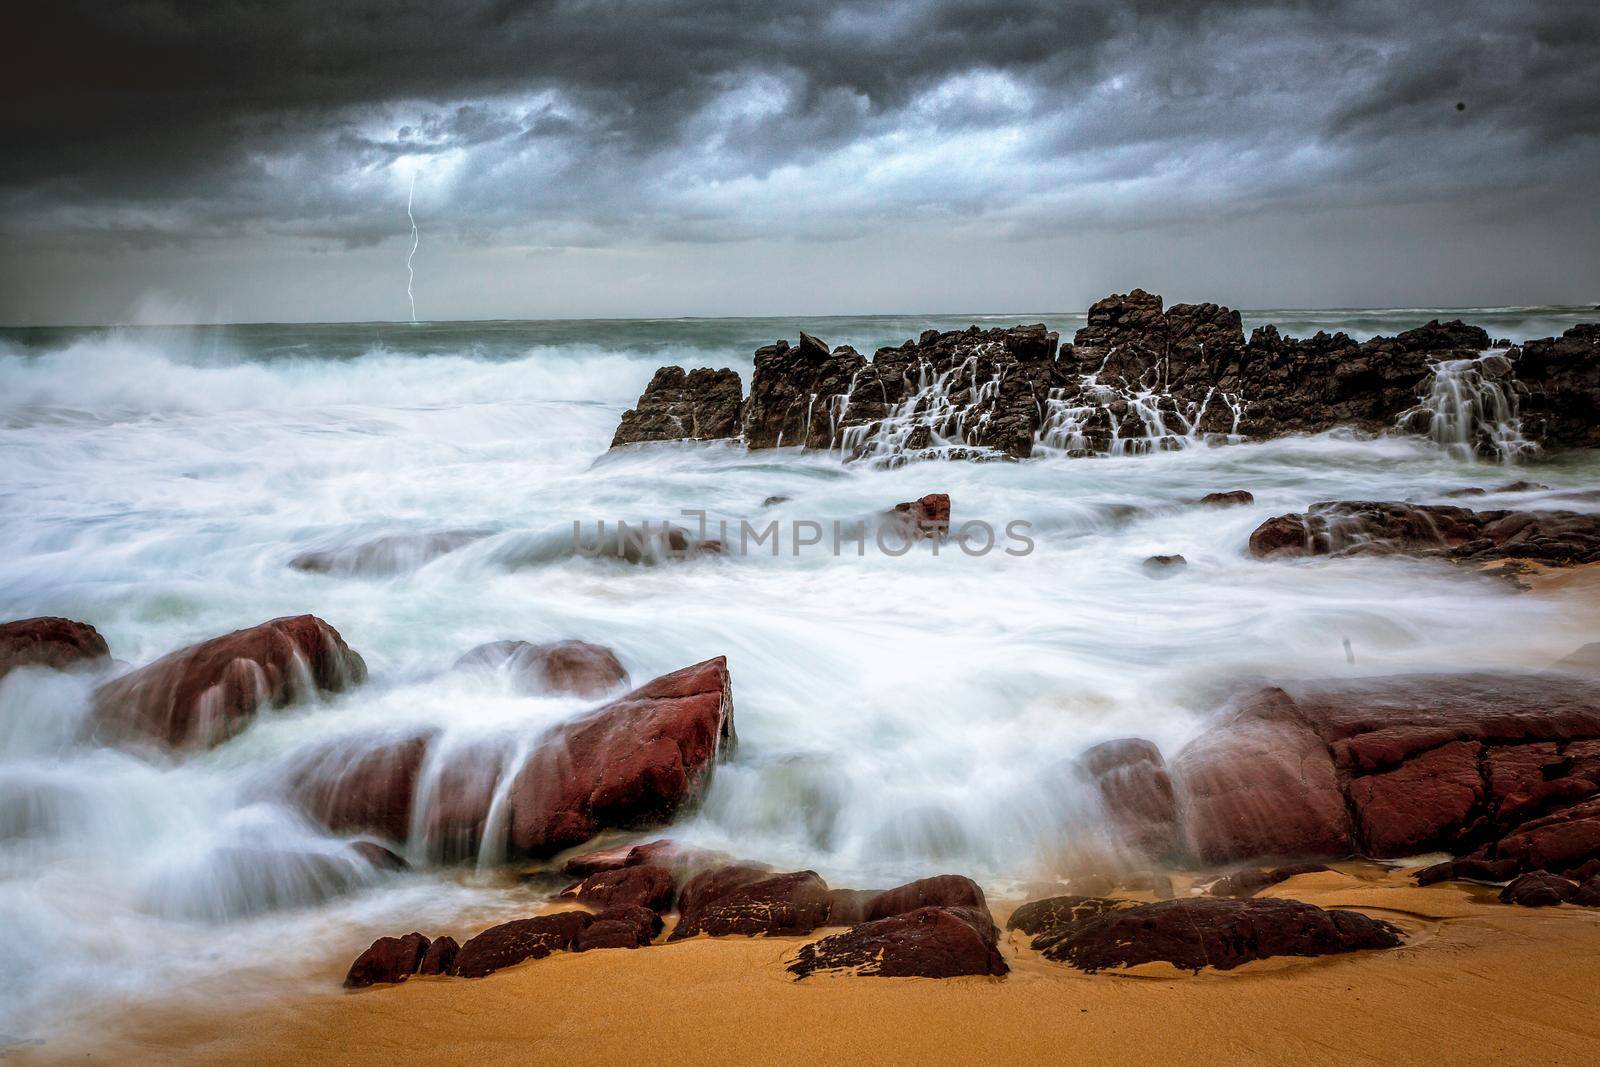 Storm over beach and turbulent waves crash over rocks onto seashore